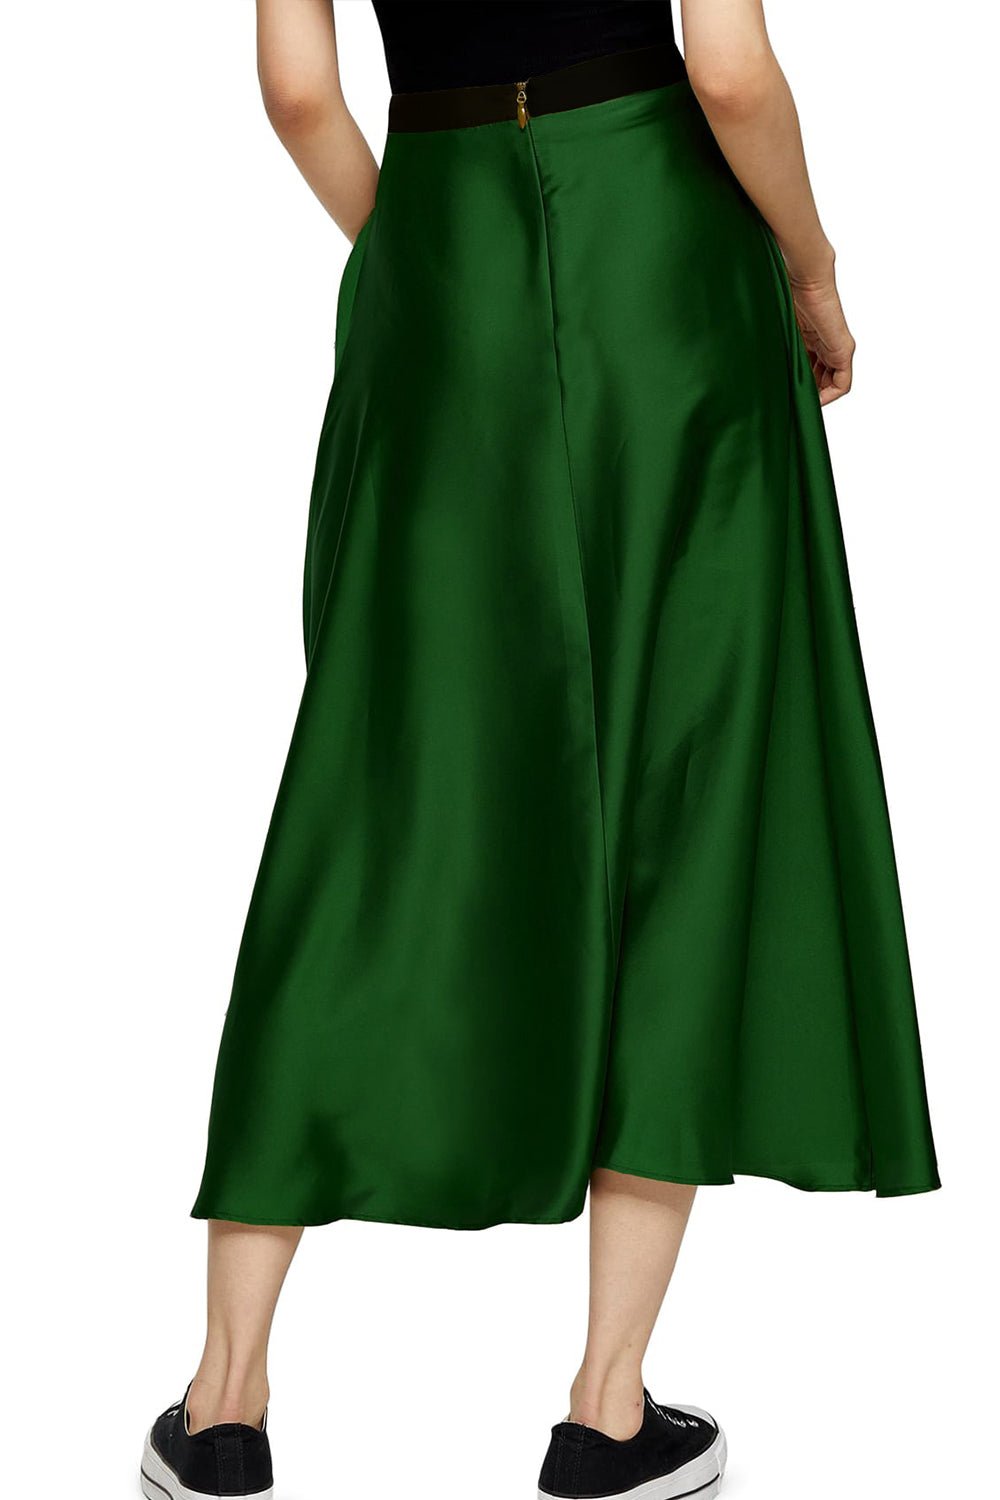 Satin Party Skirt Green